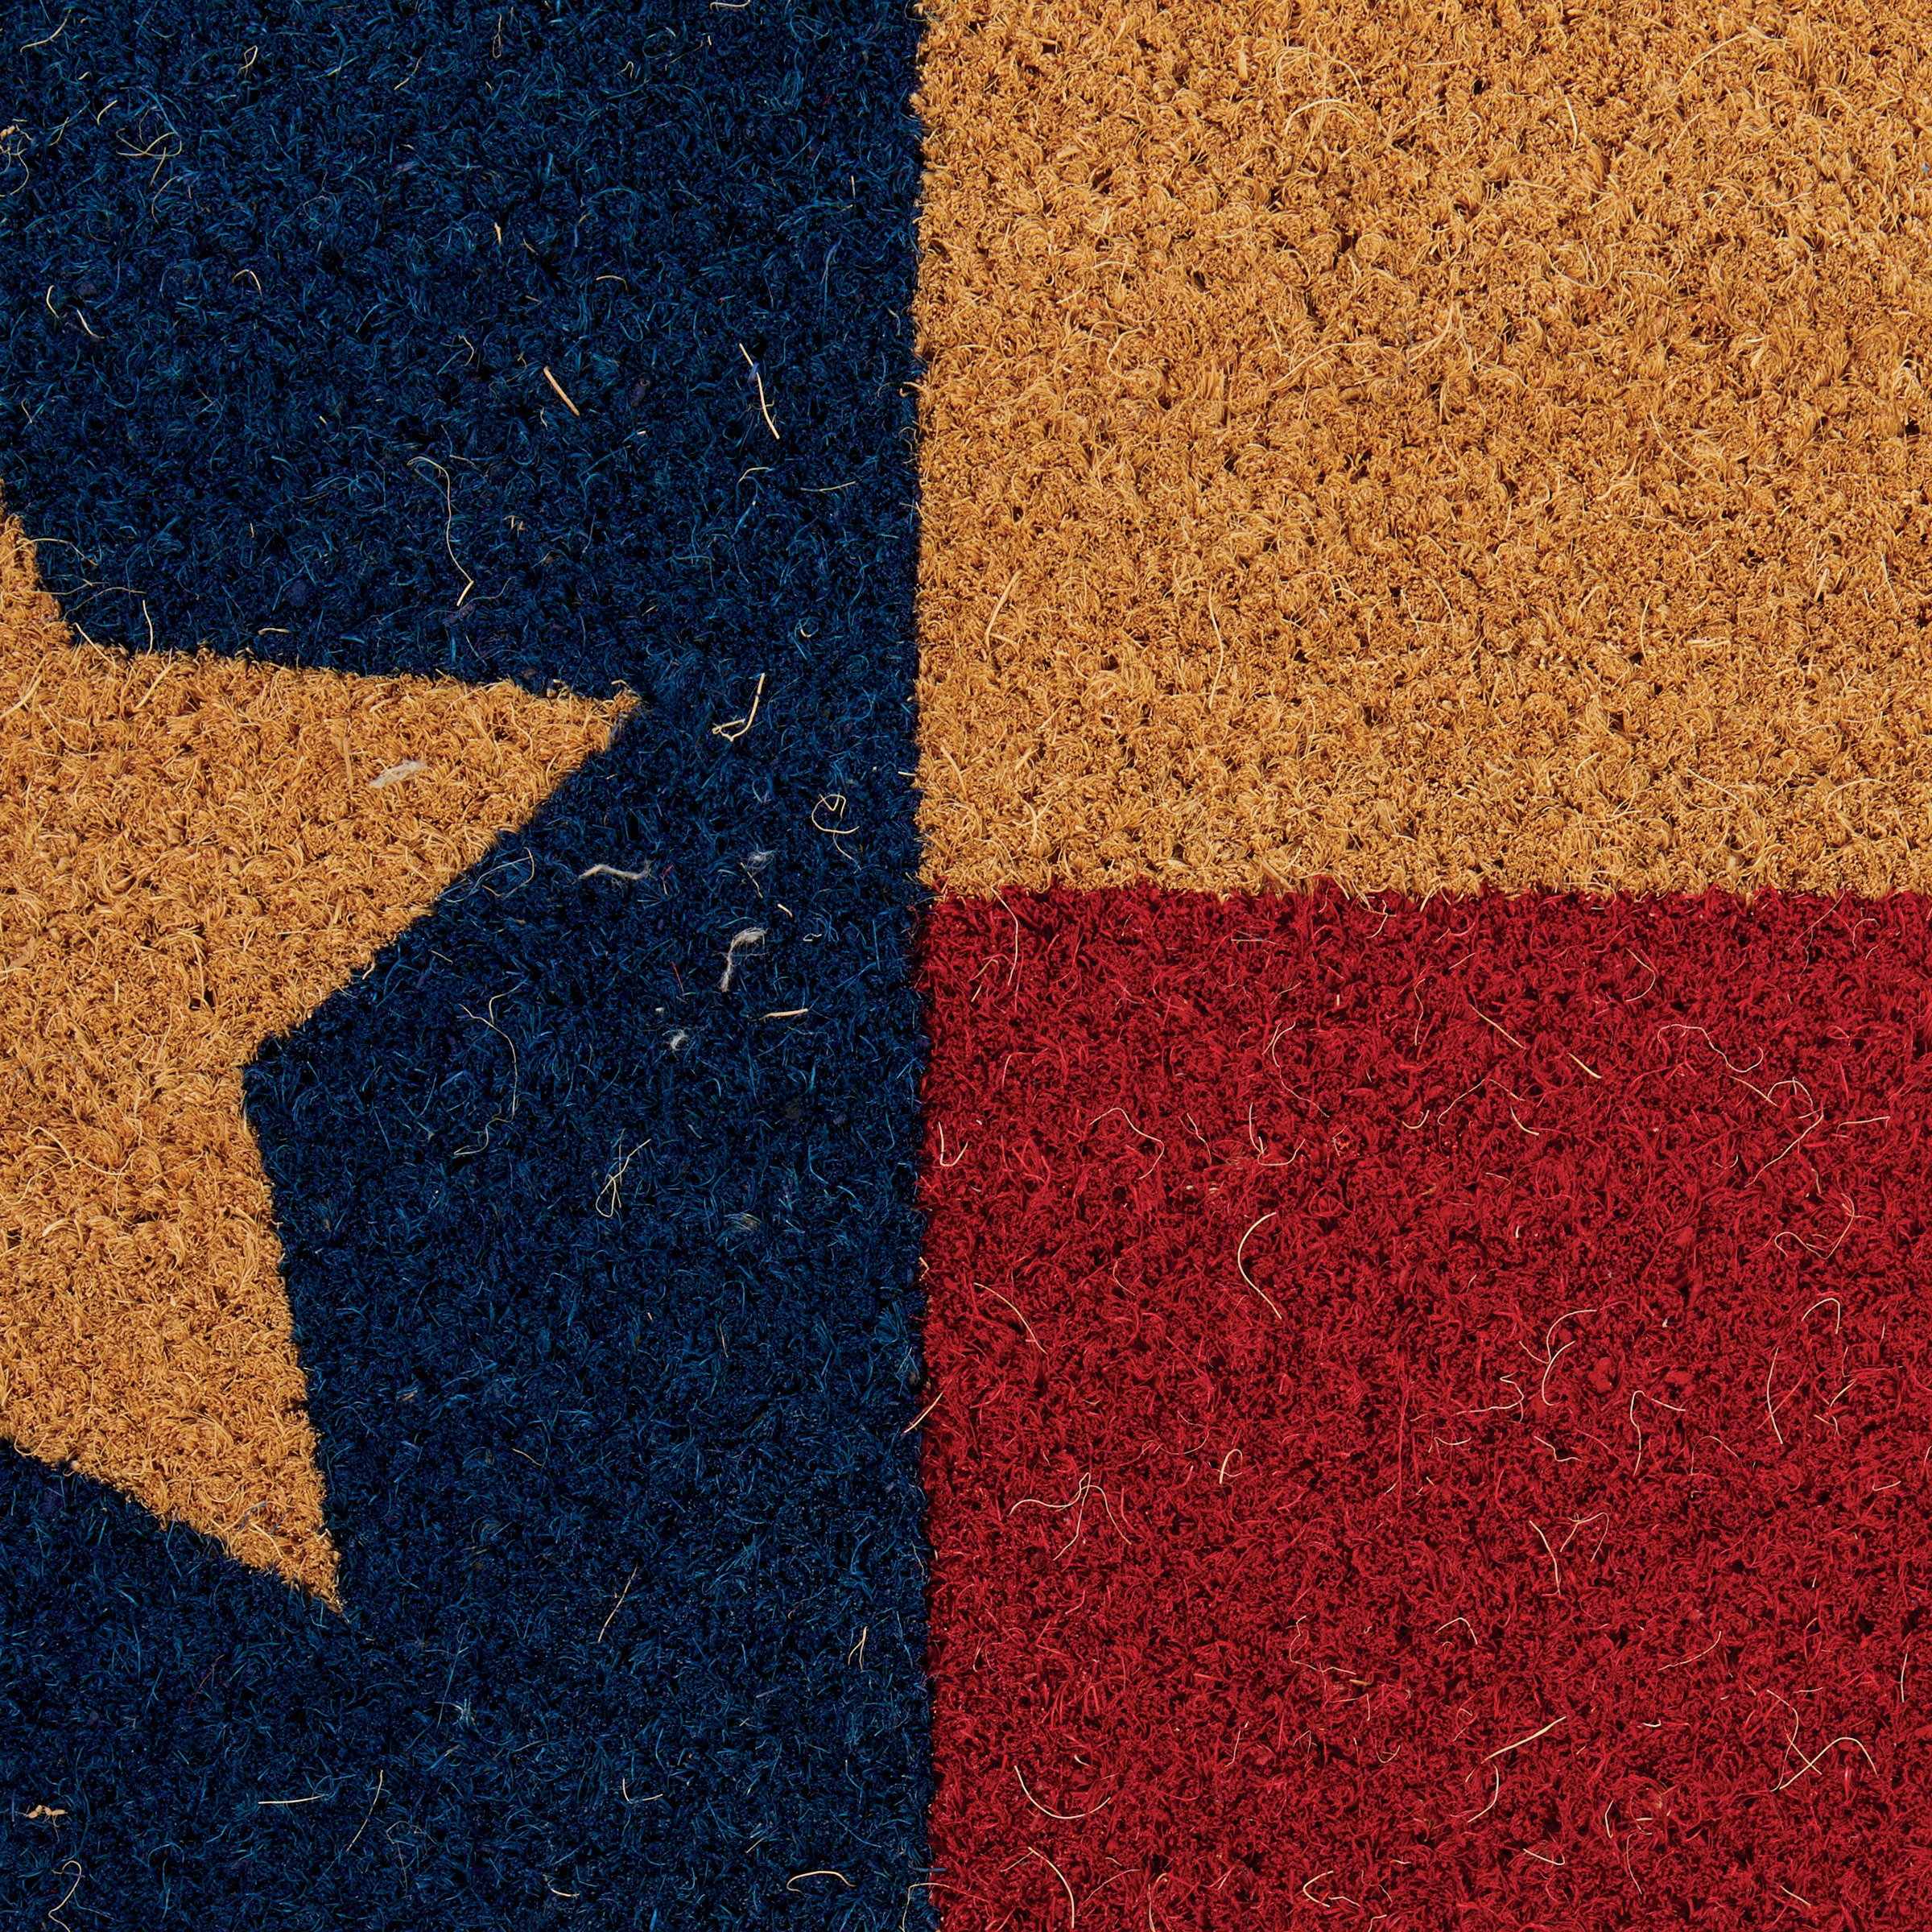 Texas Doormat, State doormat, Lone star state